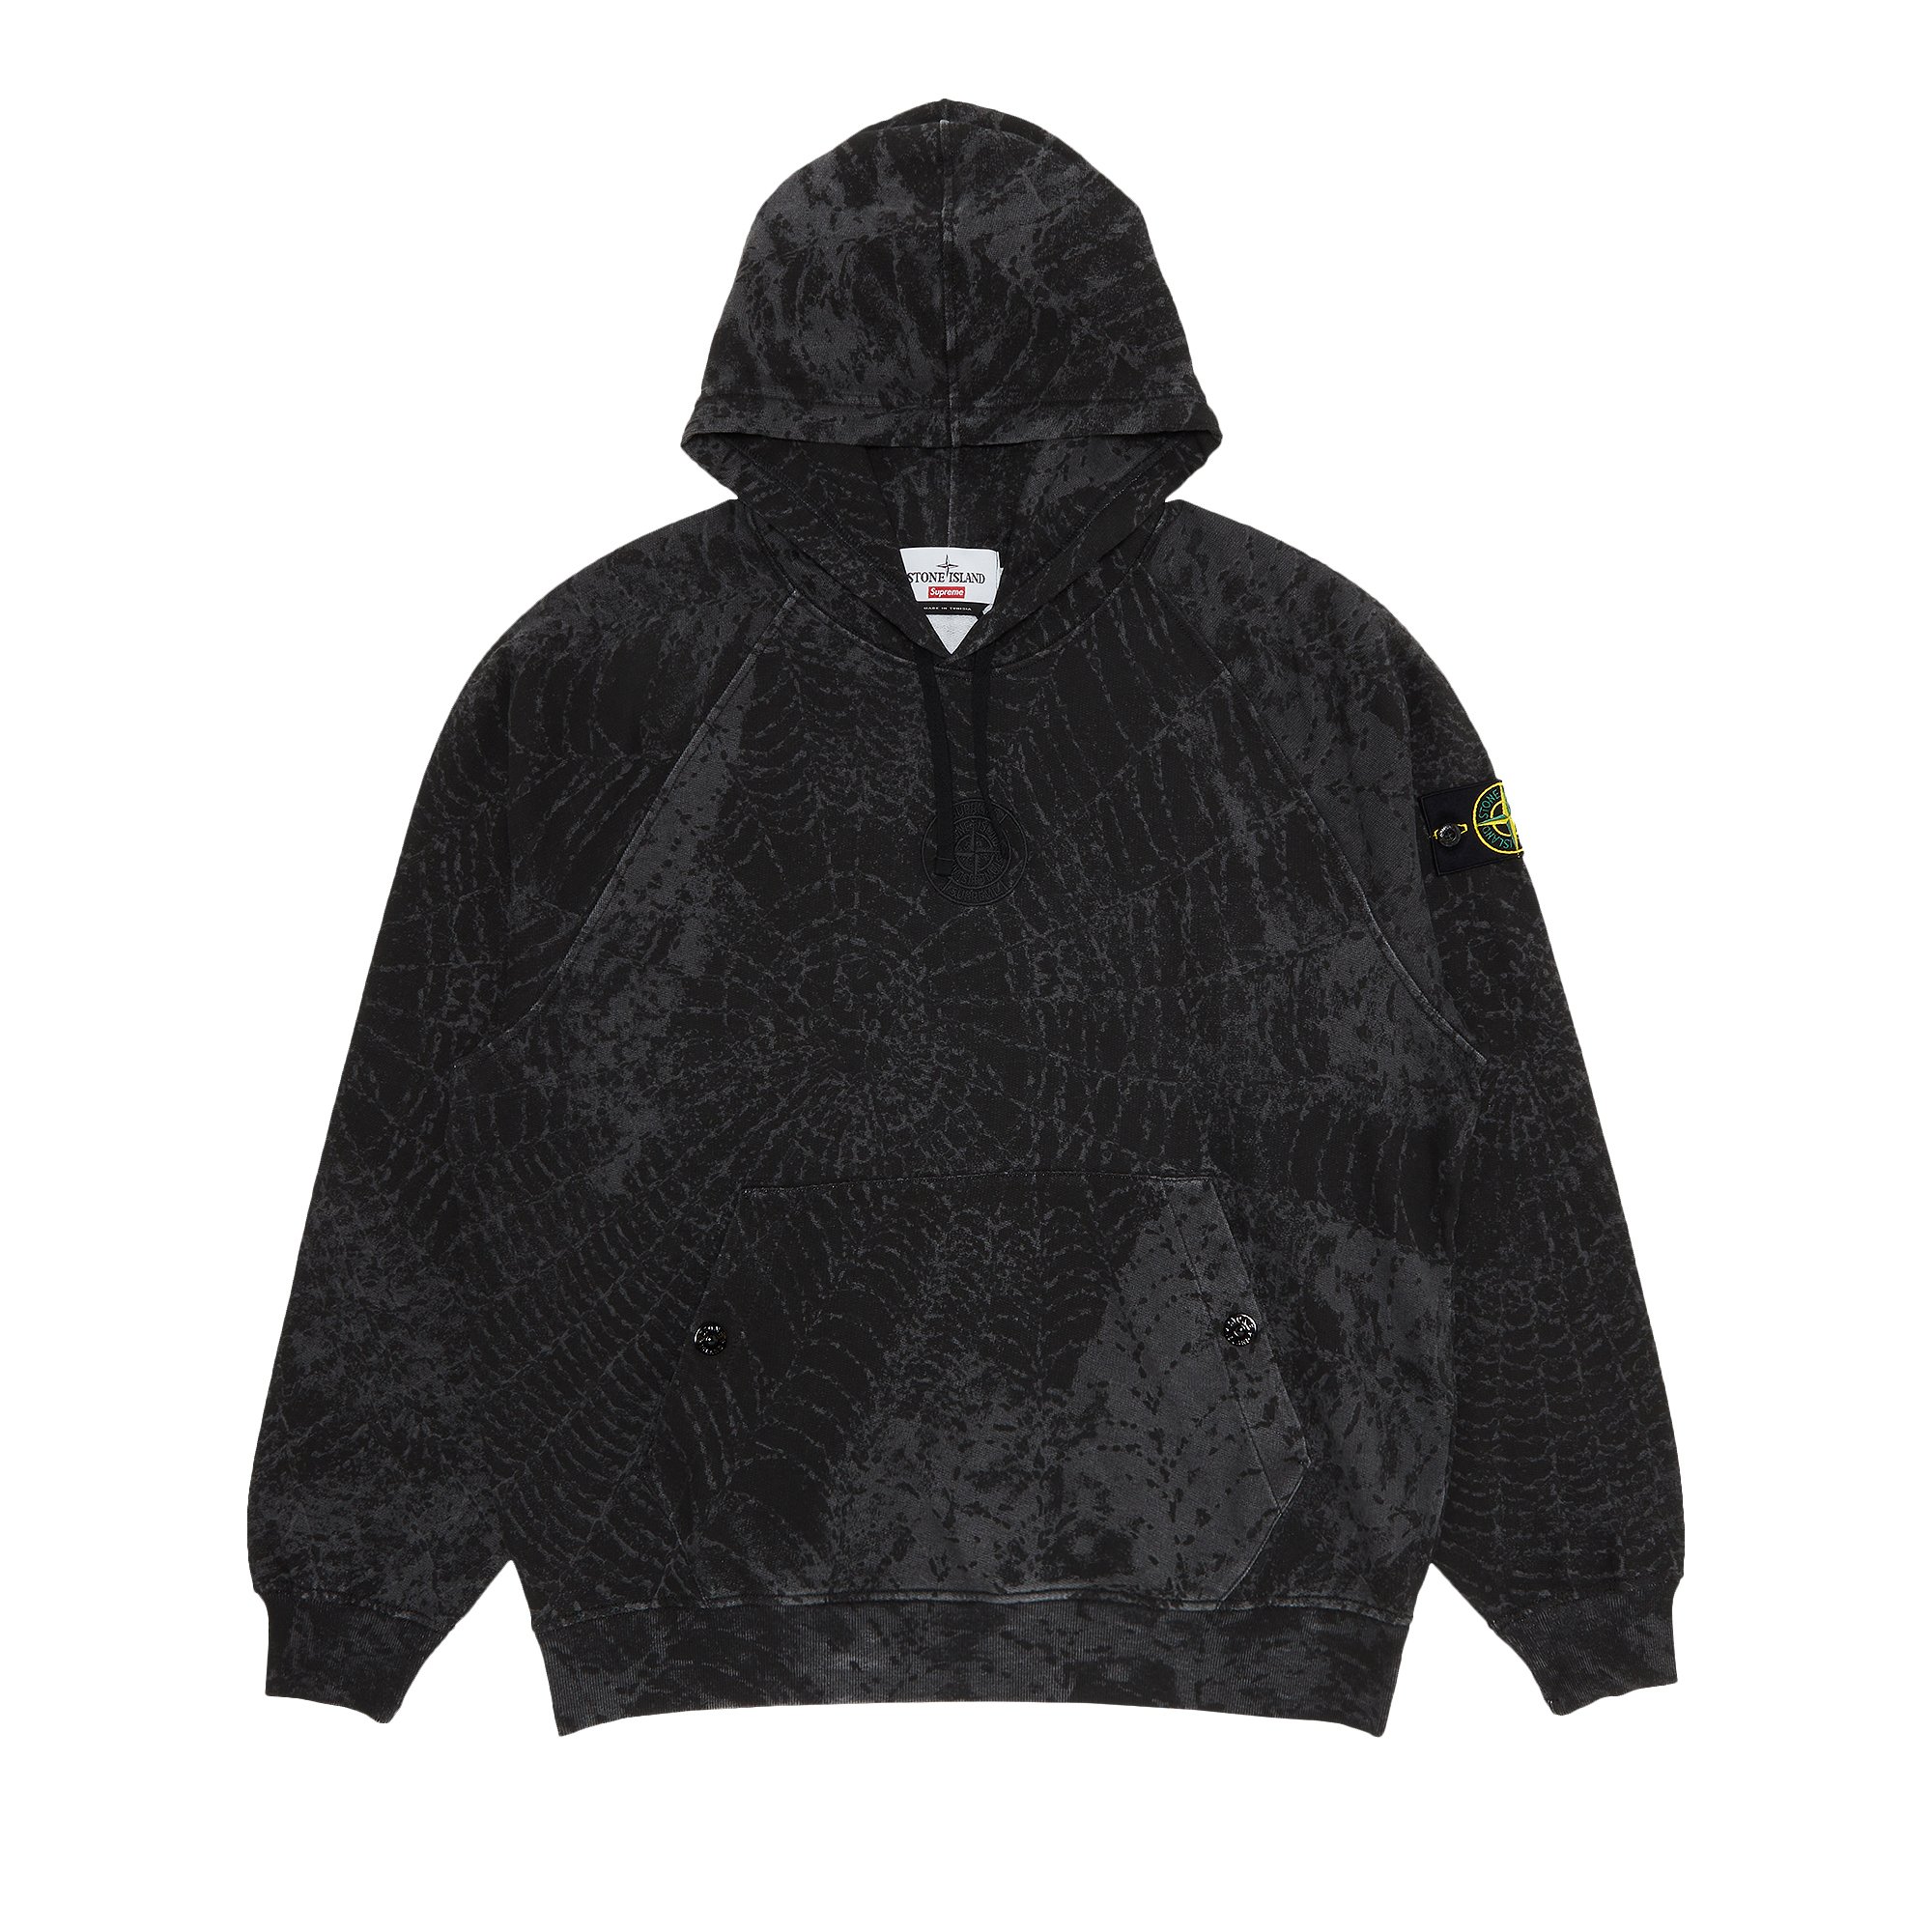 Supreme x Stone Island Hooded Sweatshirt 'Black'